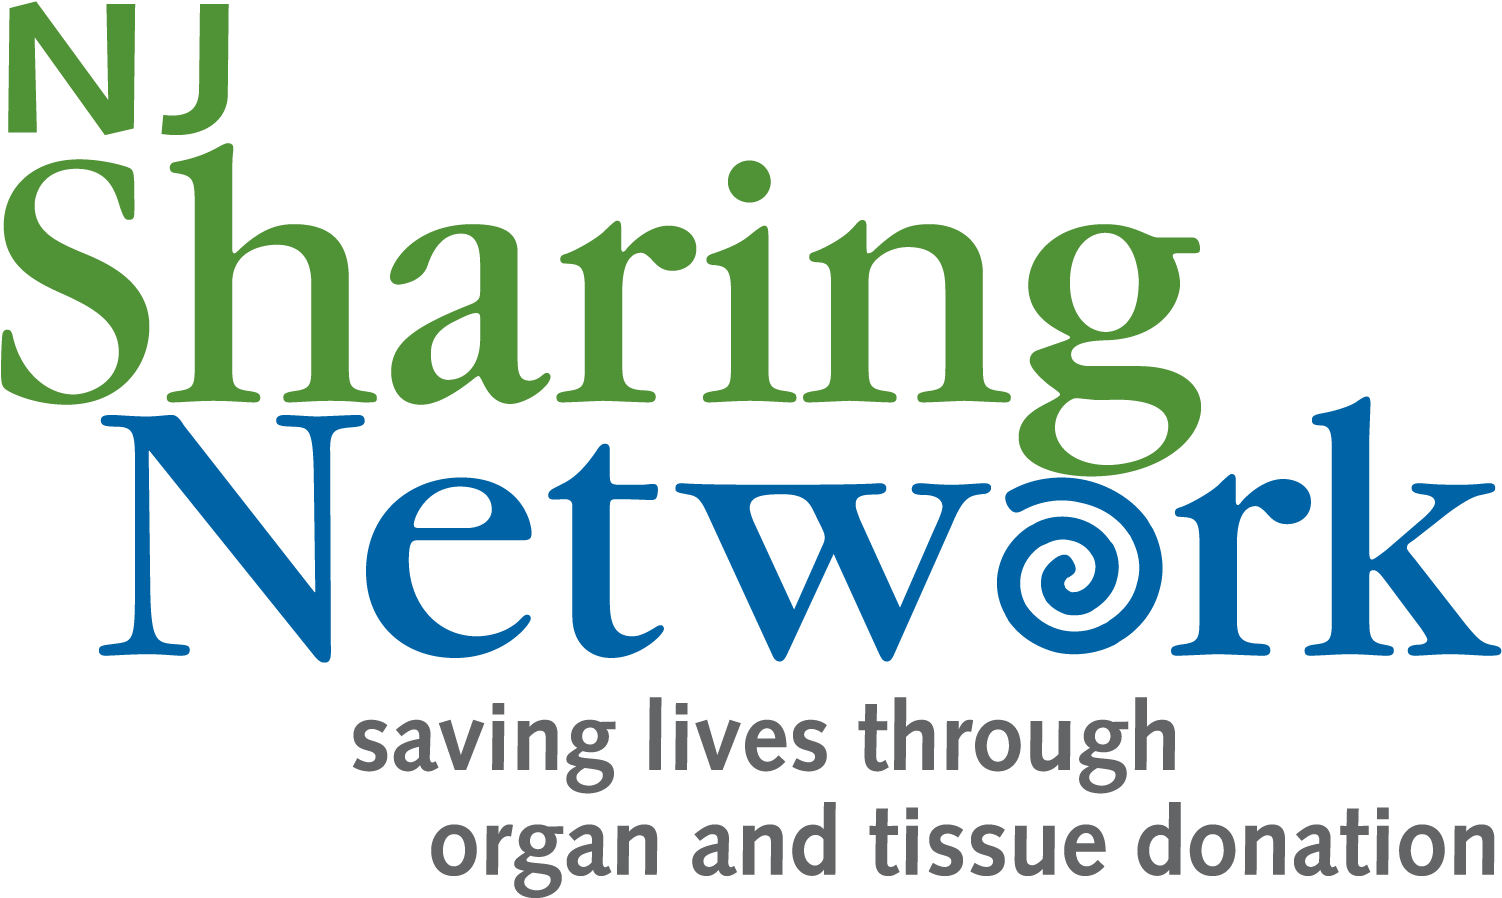 Nj Sharing Network - Nj Sharing Network Donate Life (1801x1009)